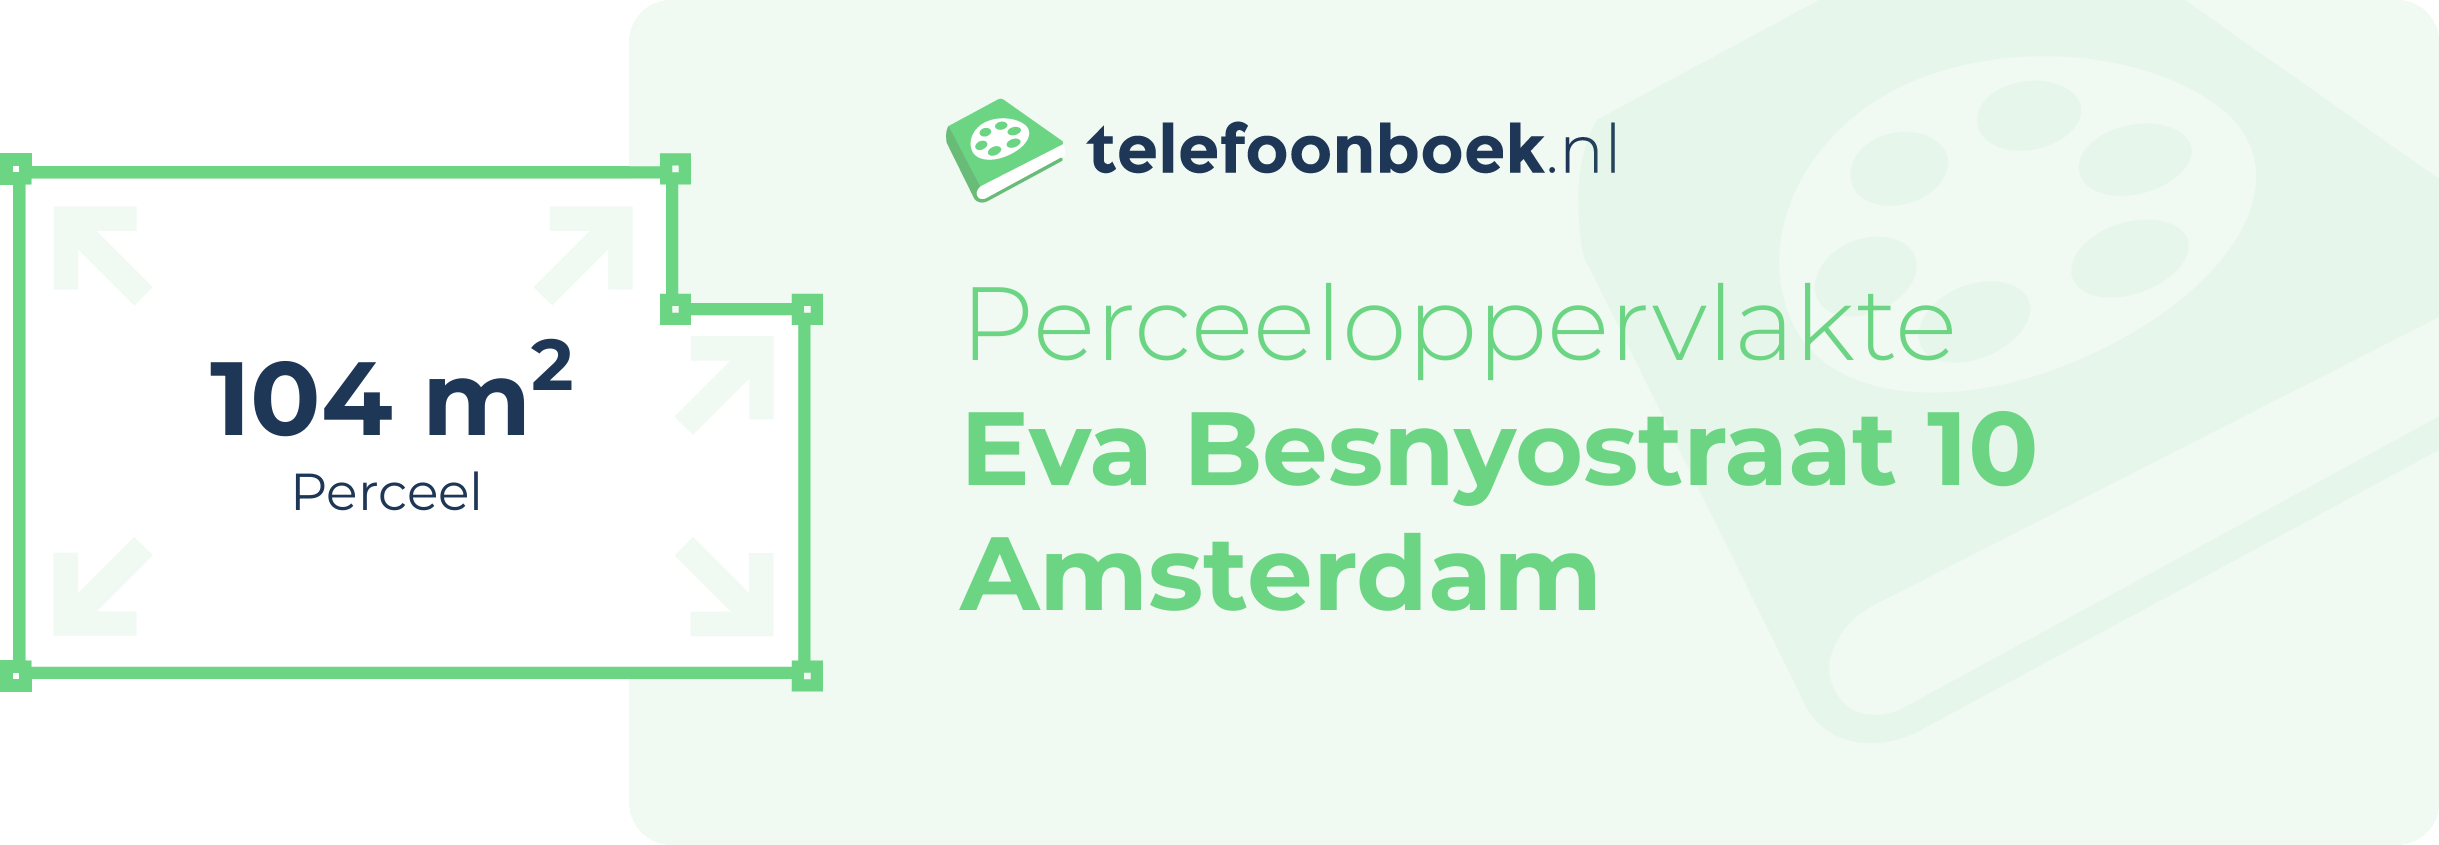 Perceeloppervlakte Eva Besnyostraat 10 Amsterdam